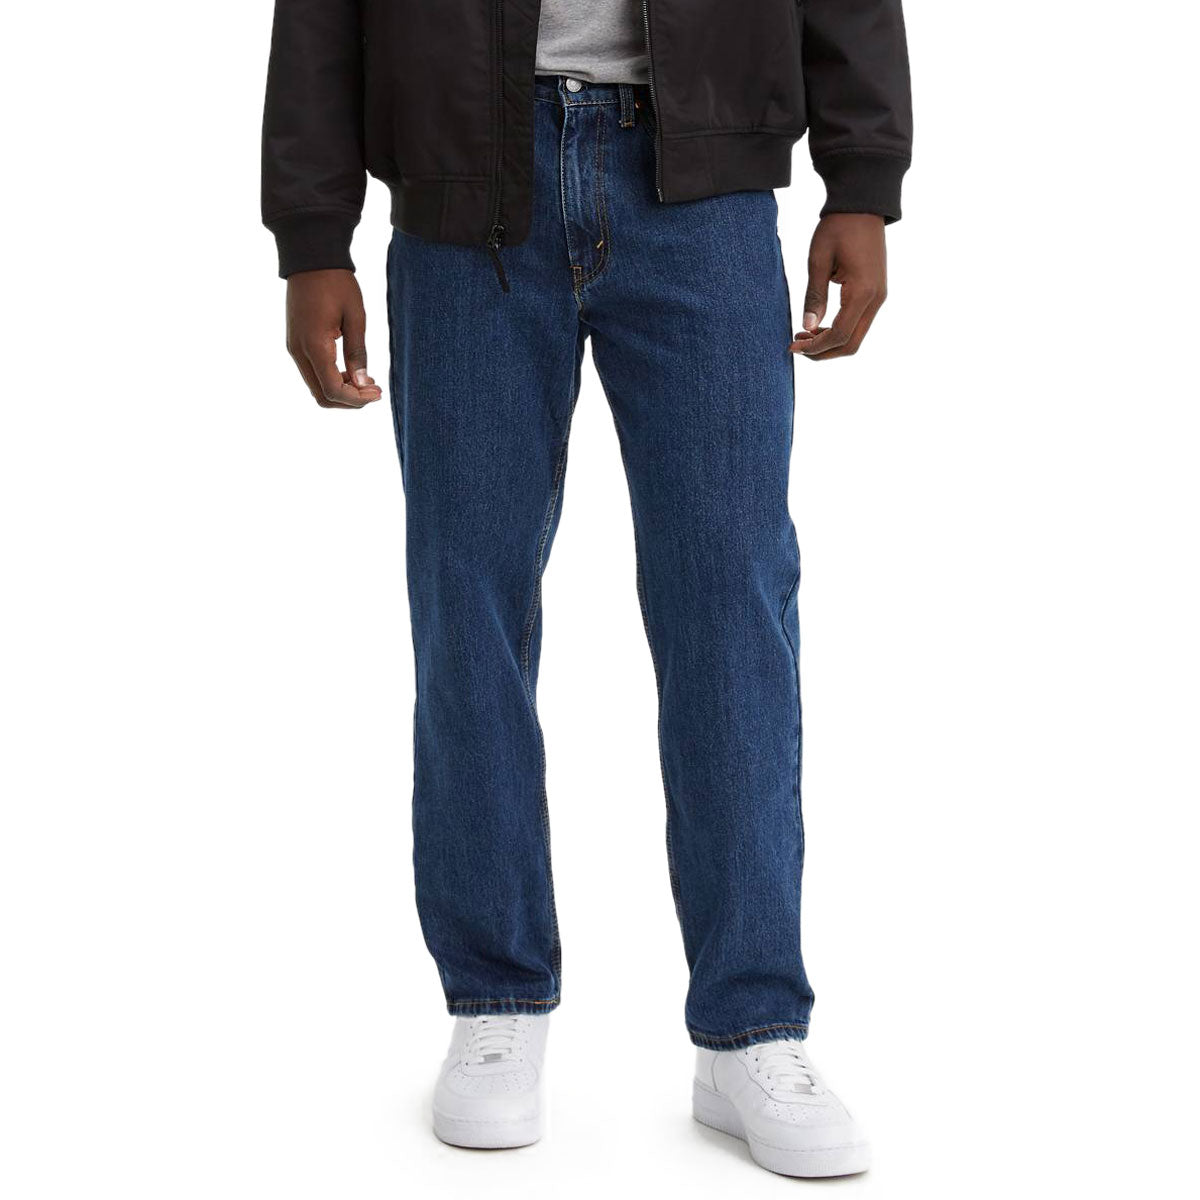 Levi's 550 Relaxed Jeans - Dark Stonewash image 1